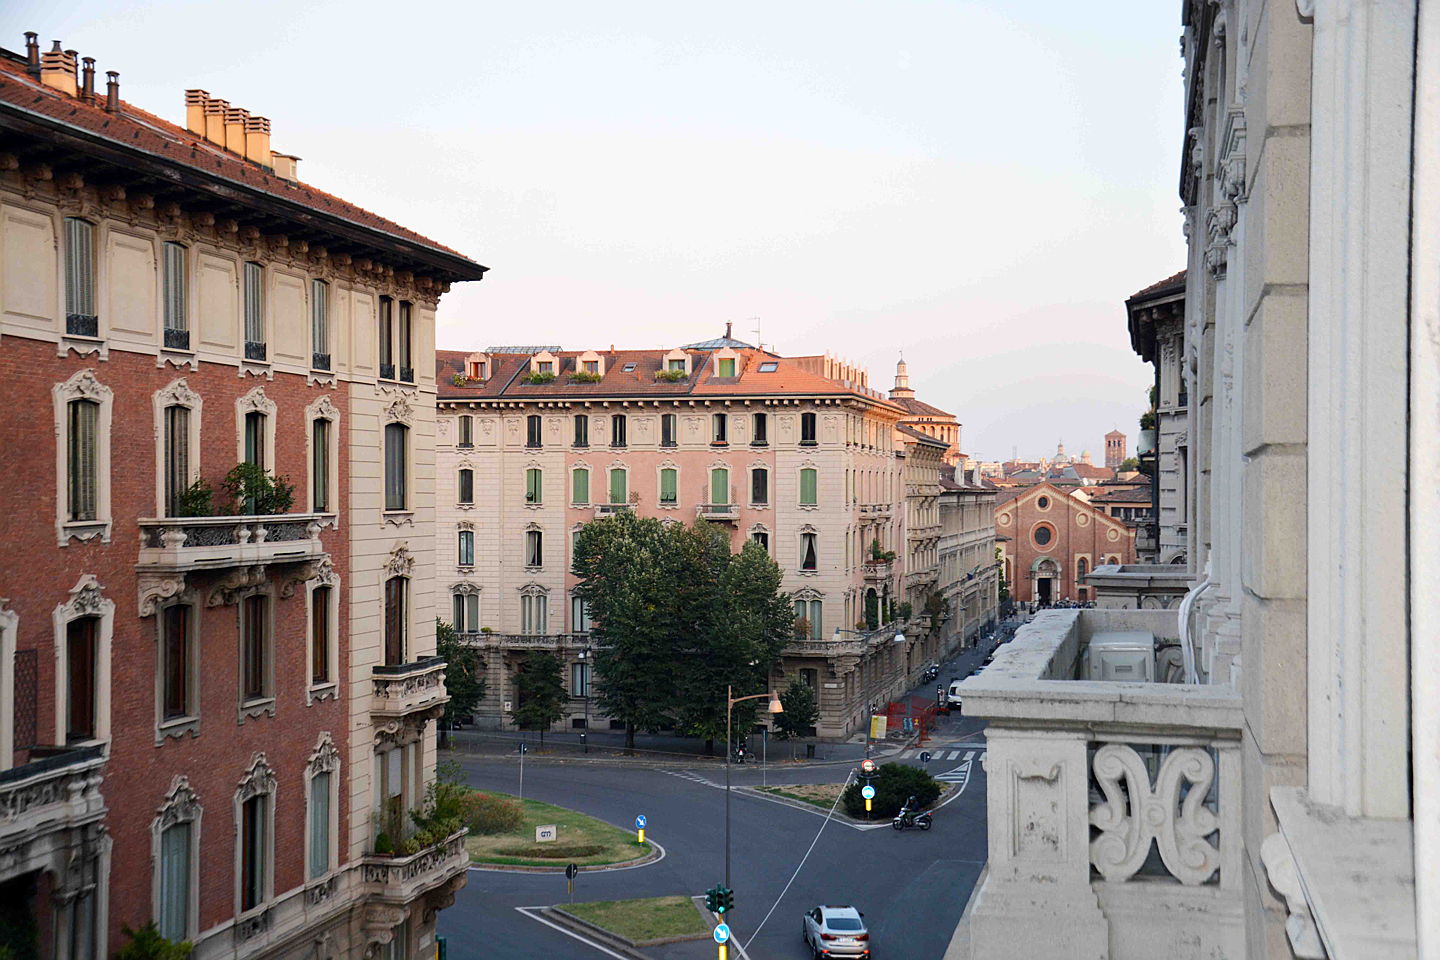  Mailand
- Appartamento_ViaBoccaccio_Vista3.jpg